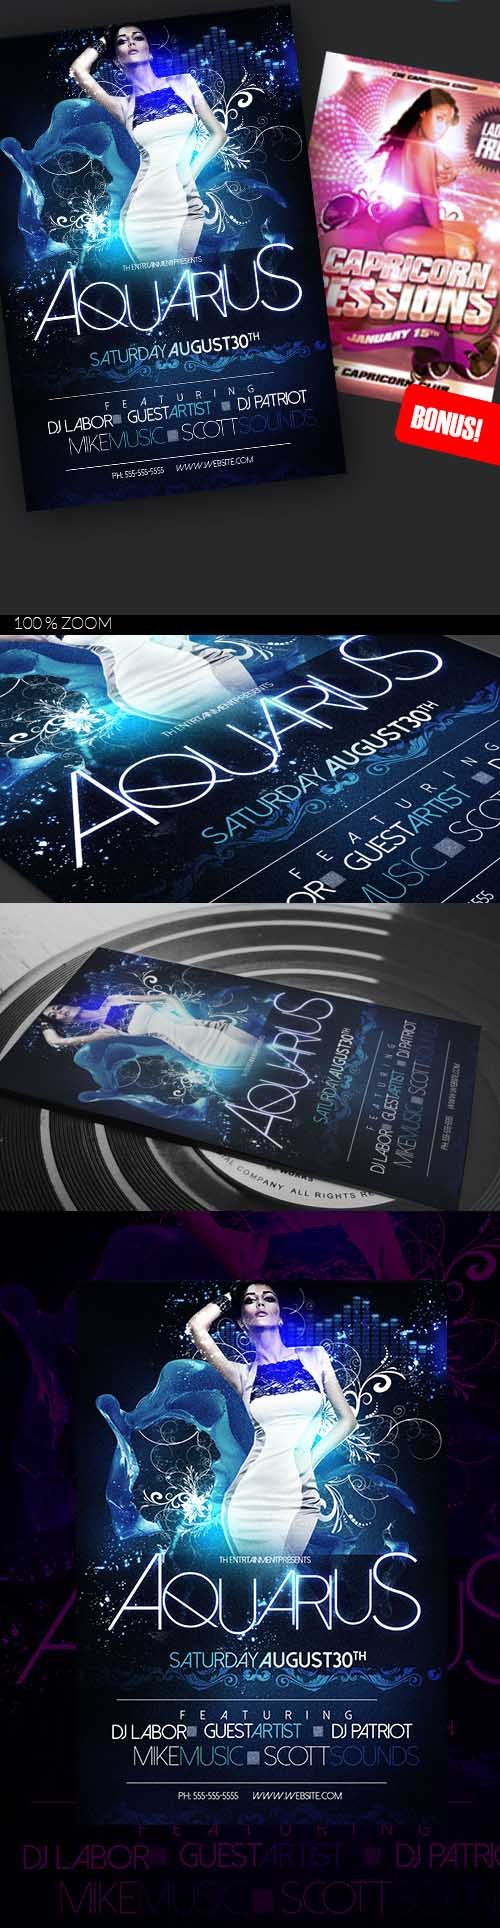 2 Flyer Template - Aquarius Party 